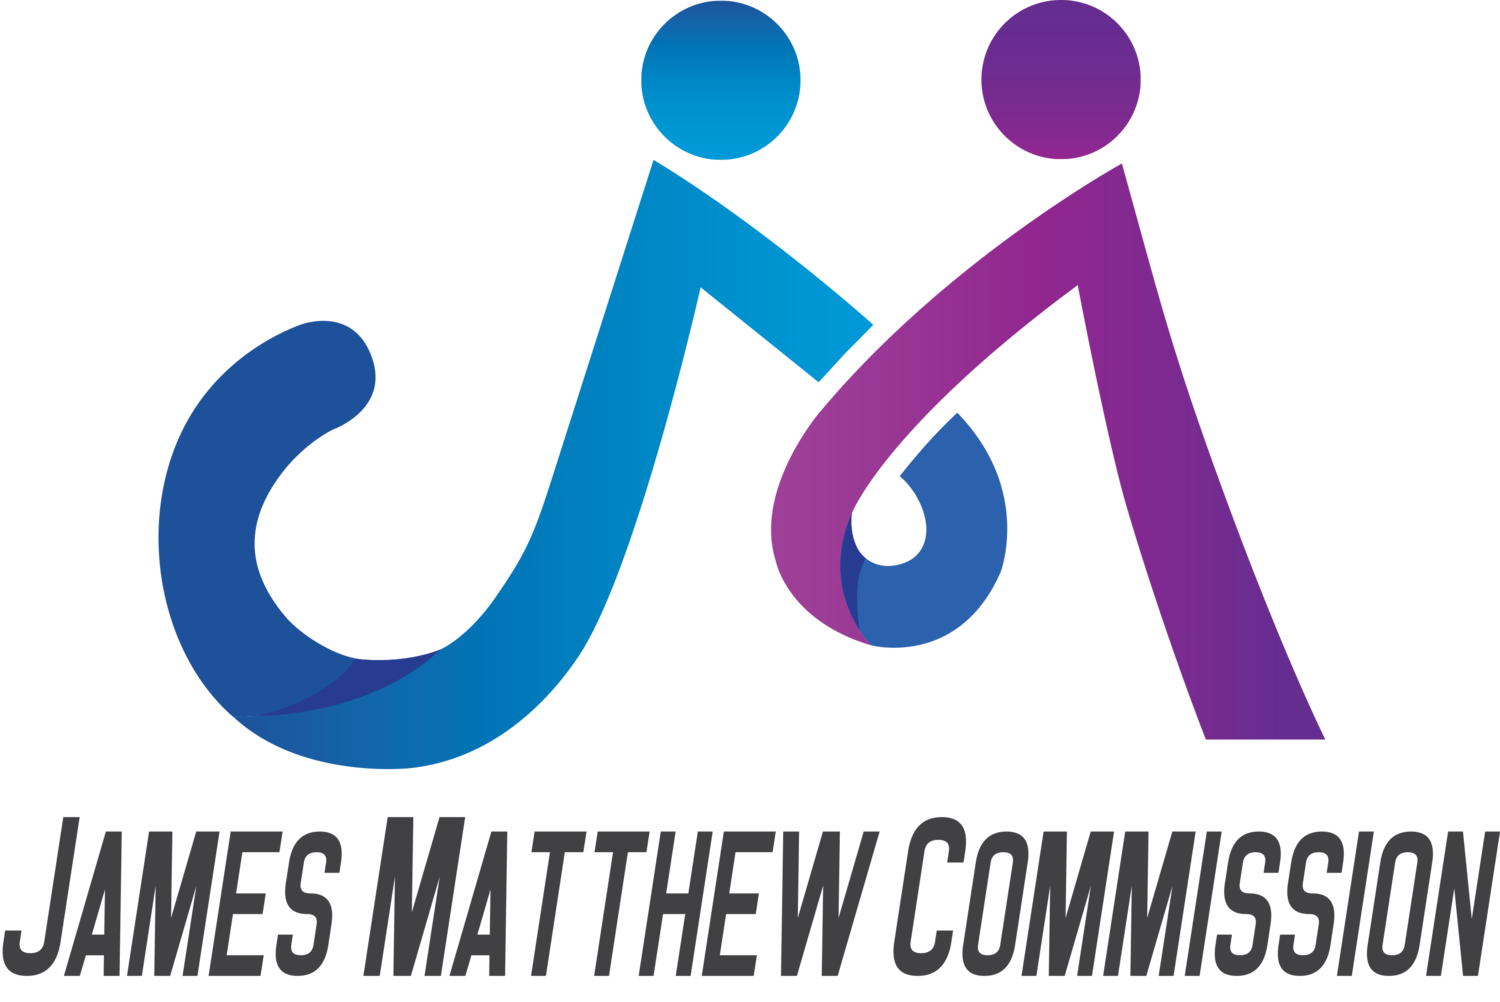 James Matthew Commission